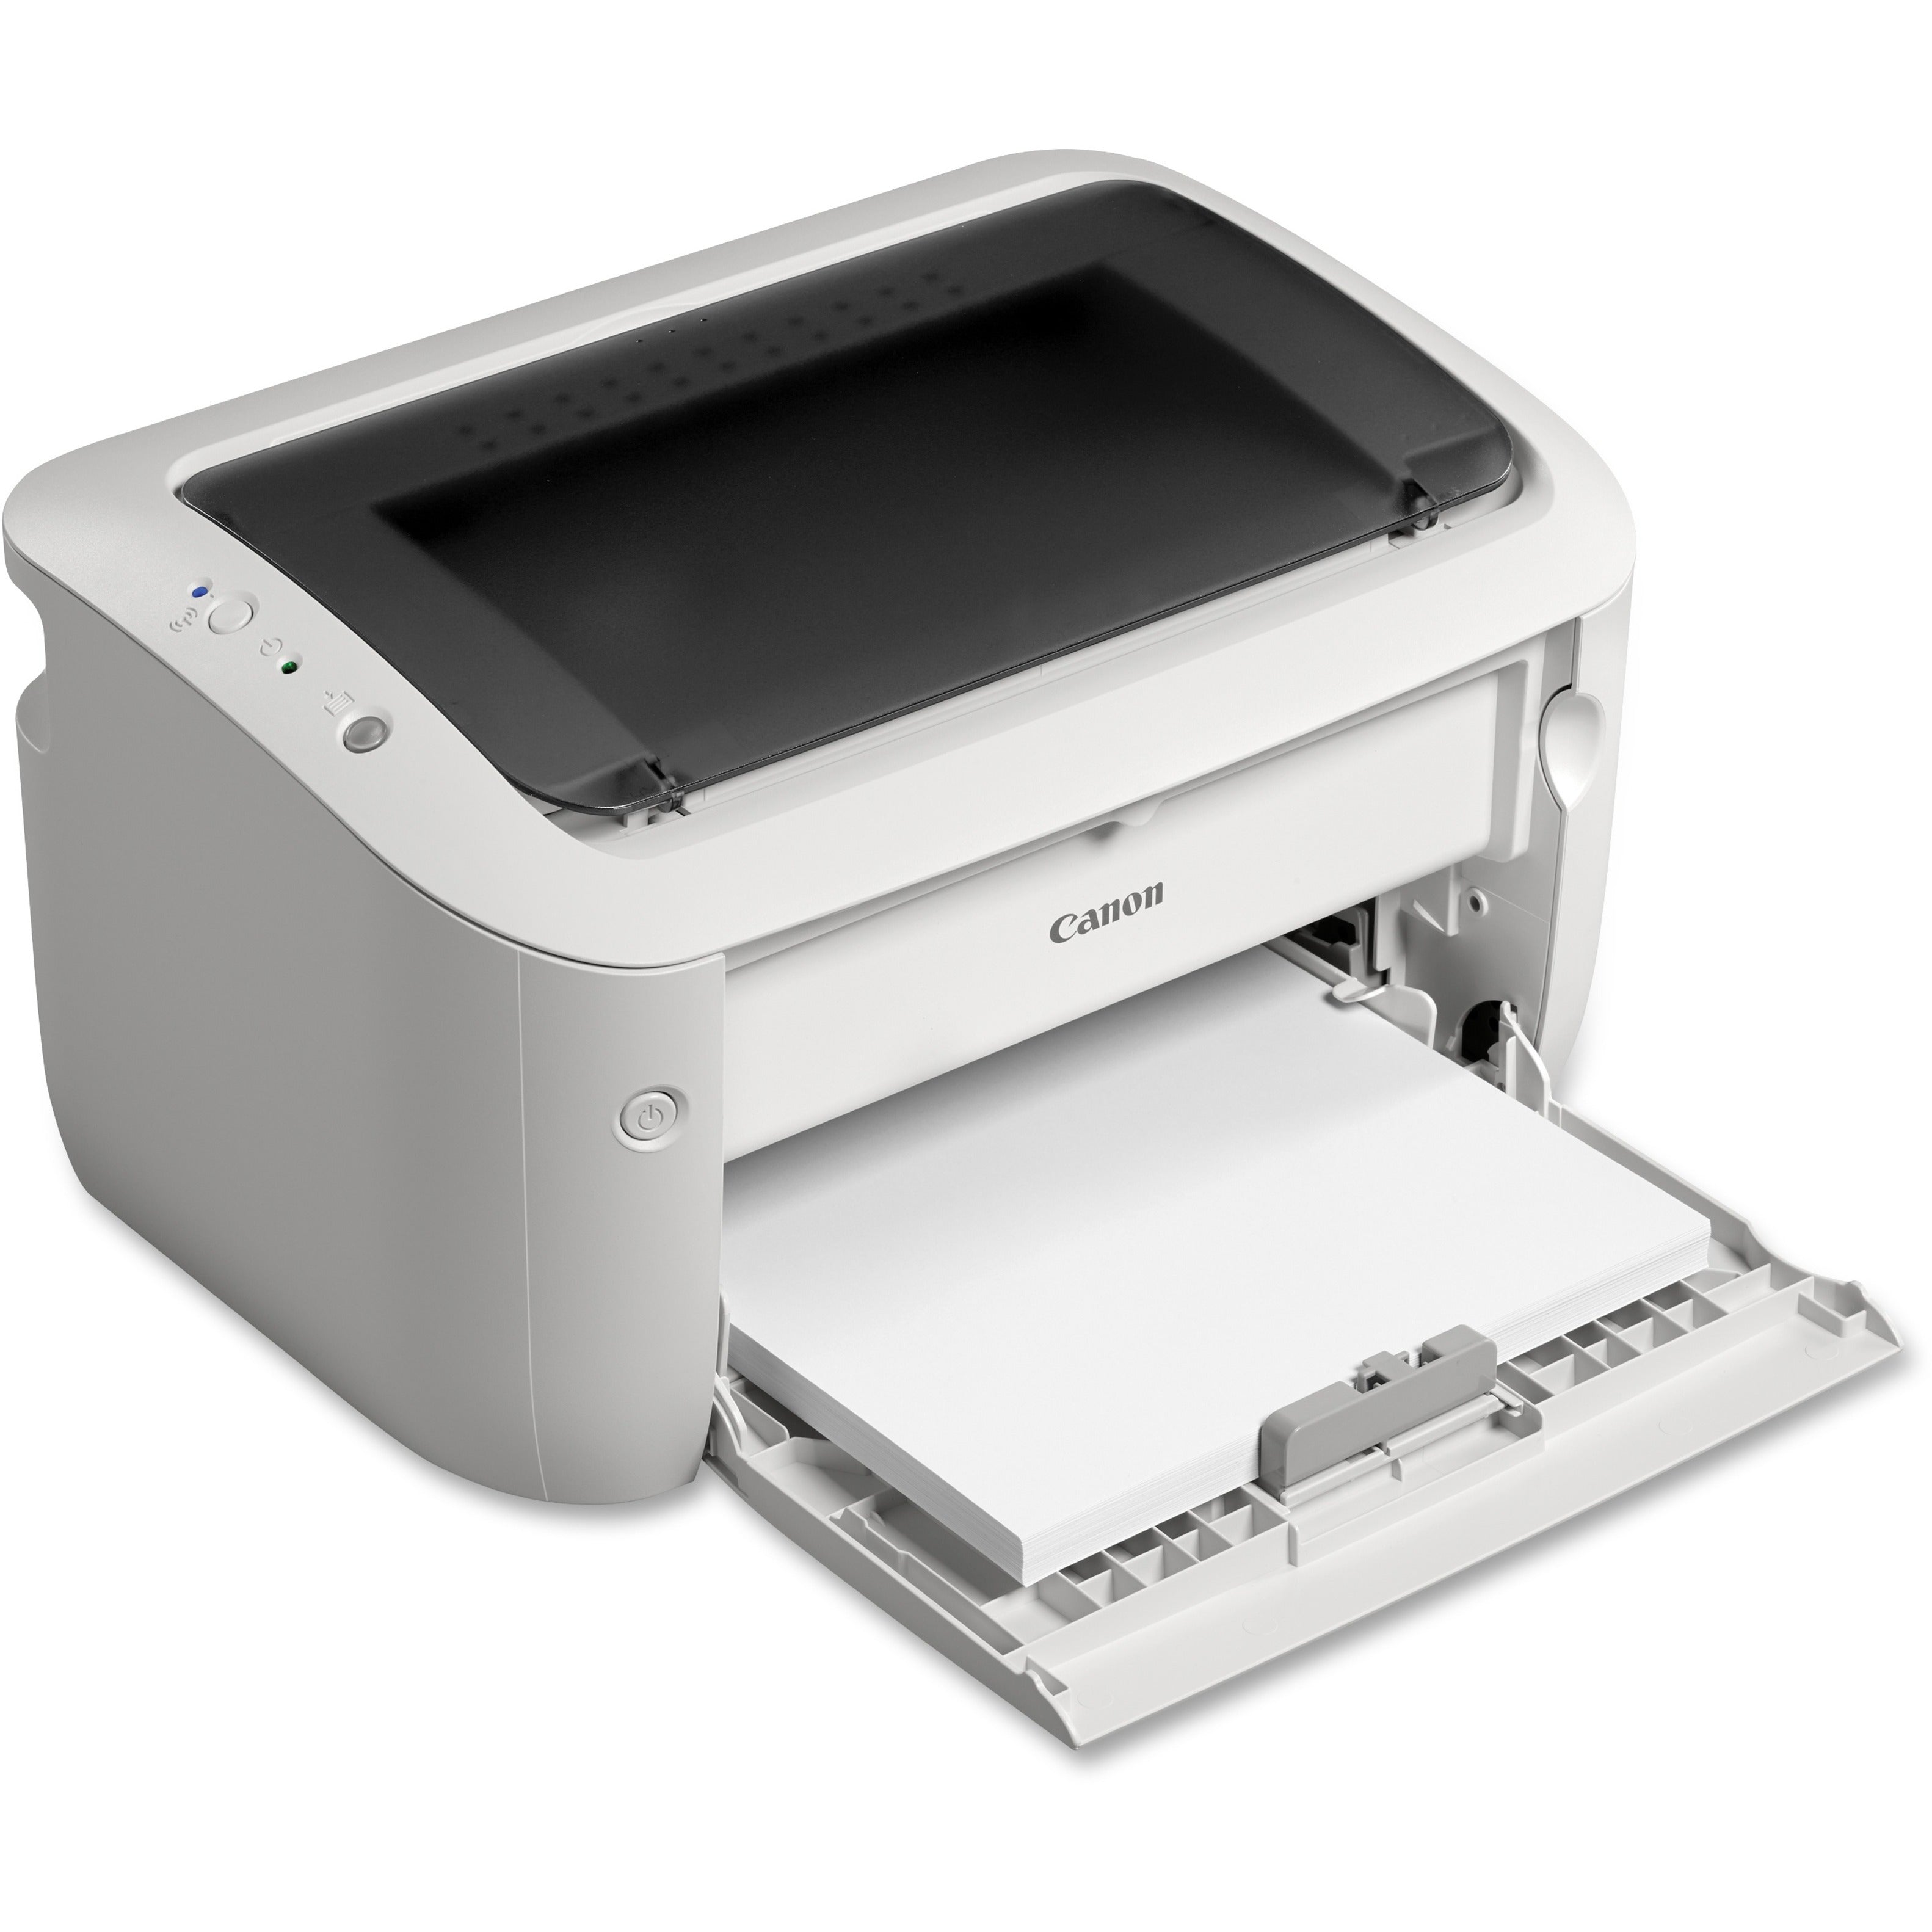 Canon 8468B003 imageClass LBP6030W Wireless Laser Printer, 19PPM, 150 Sheet Capacity, White